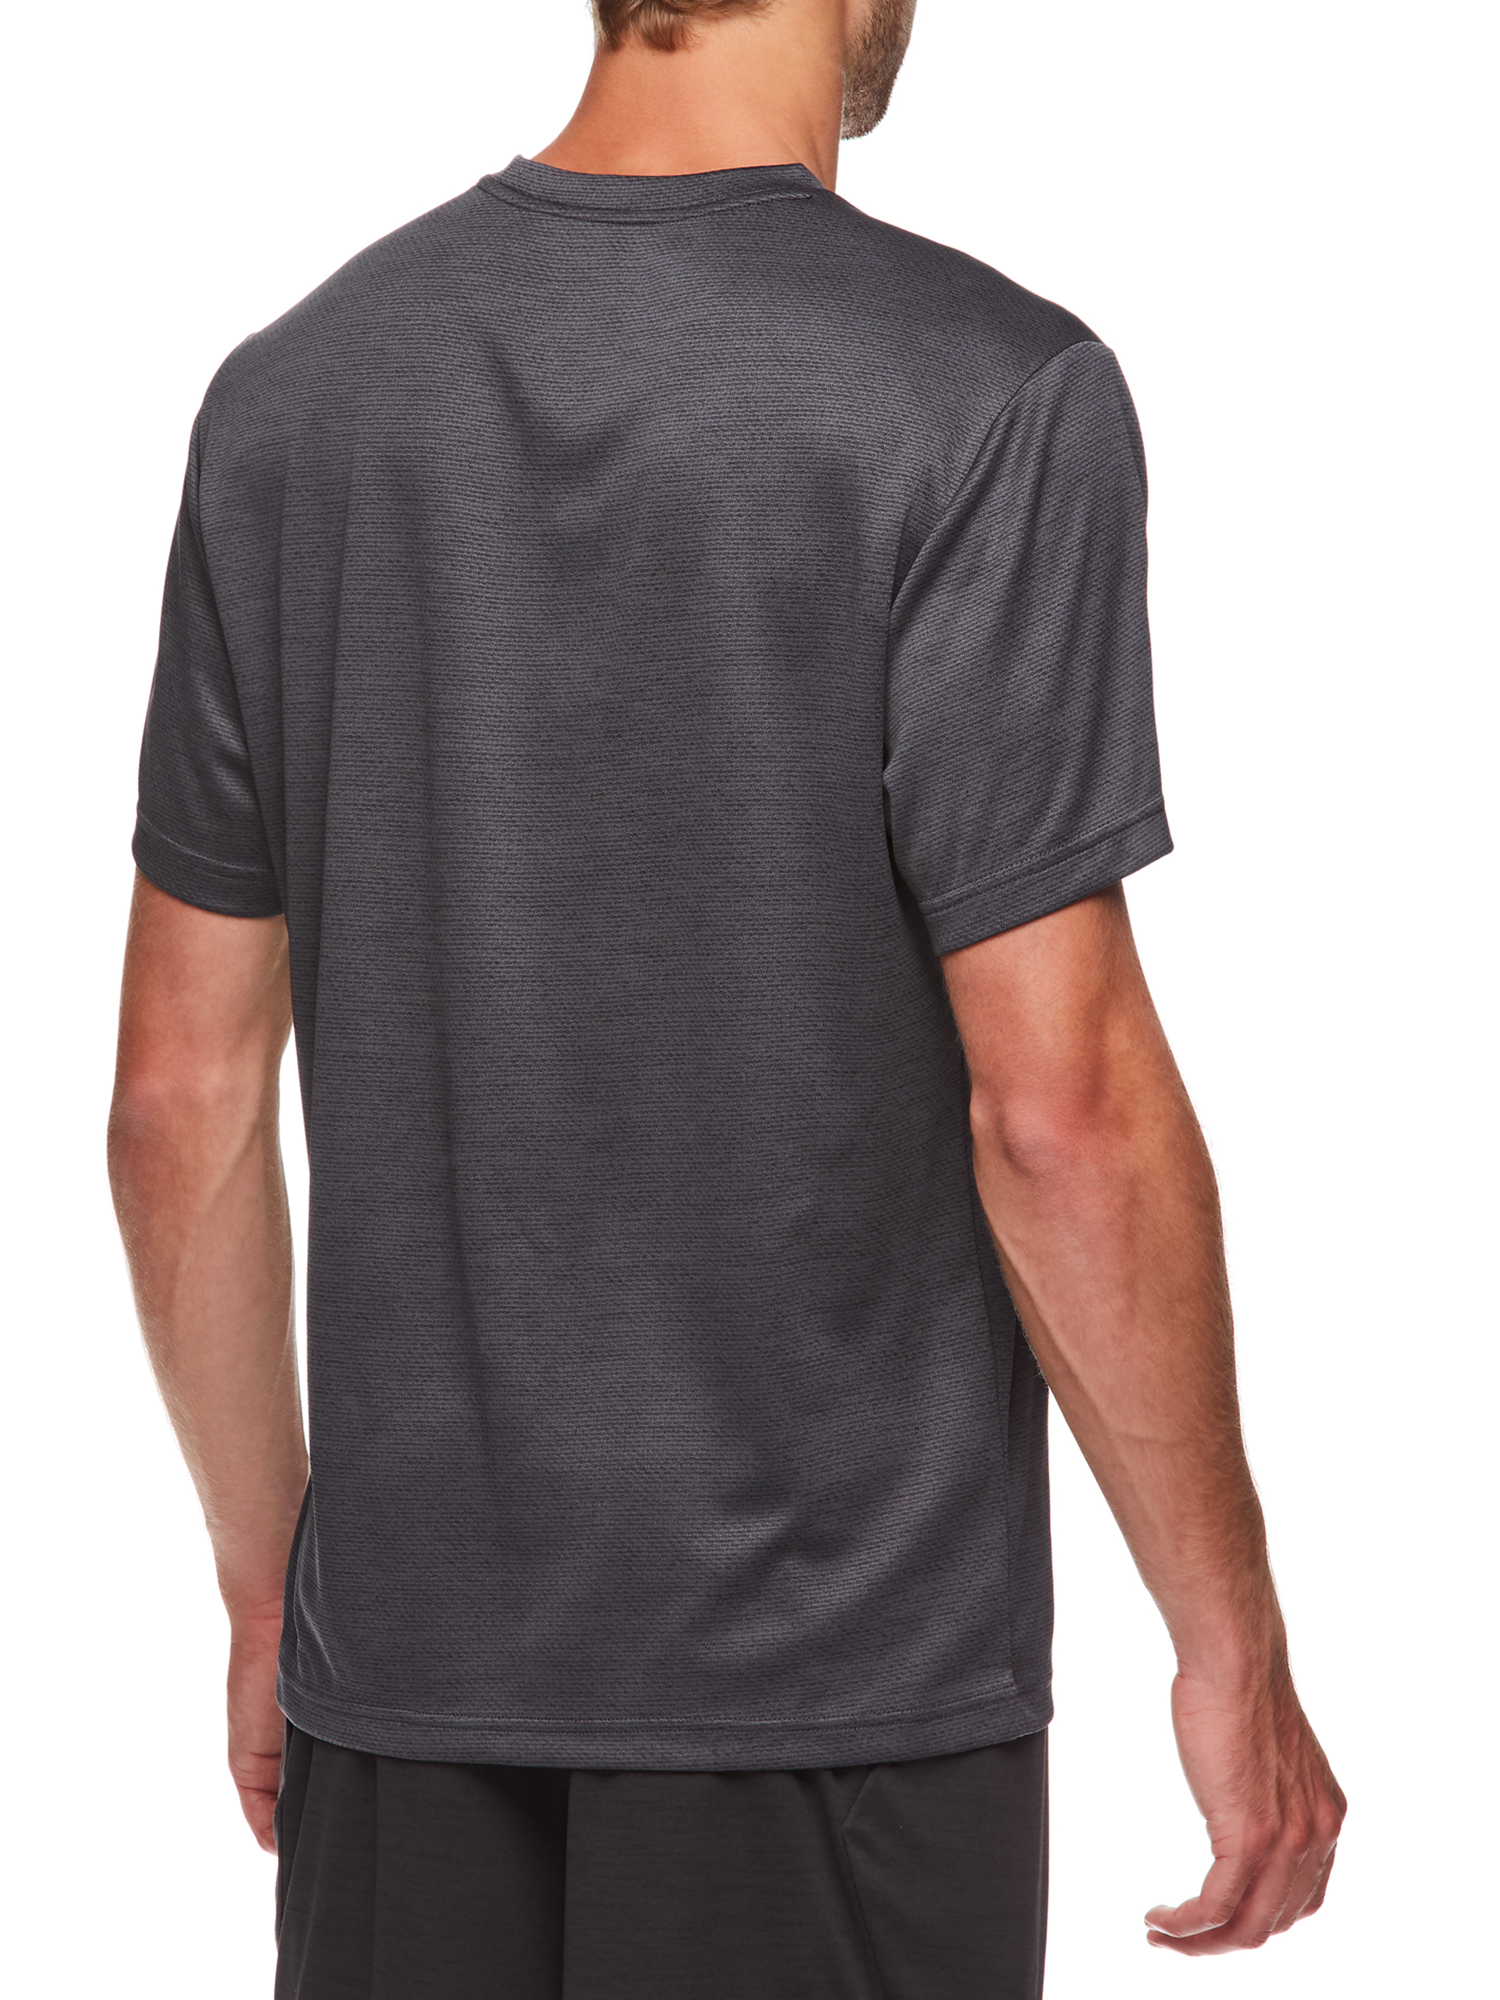 Reebok Men's Poseidon Short Sleeve T-Shirt - image 2 of 4